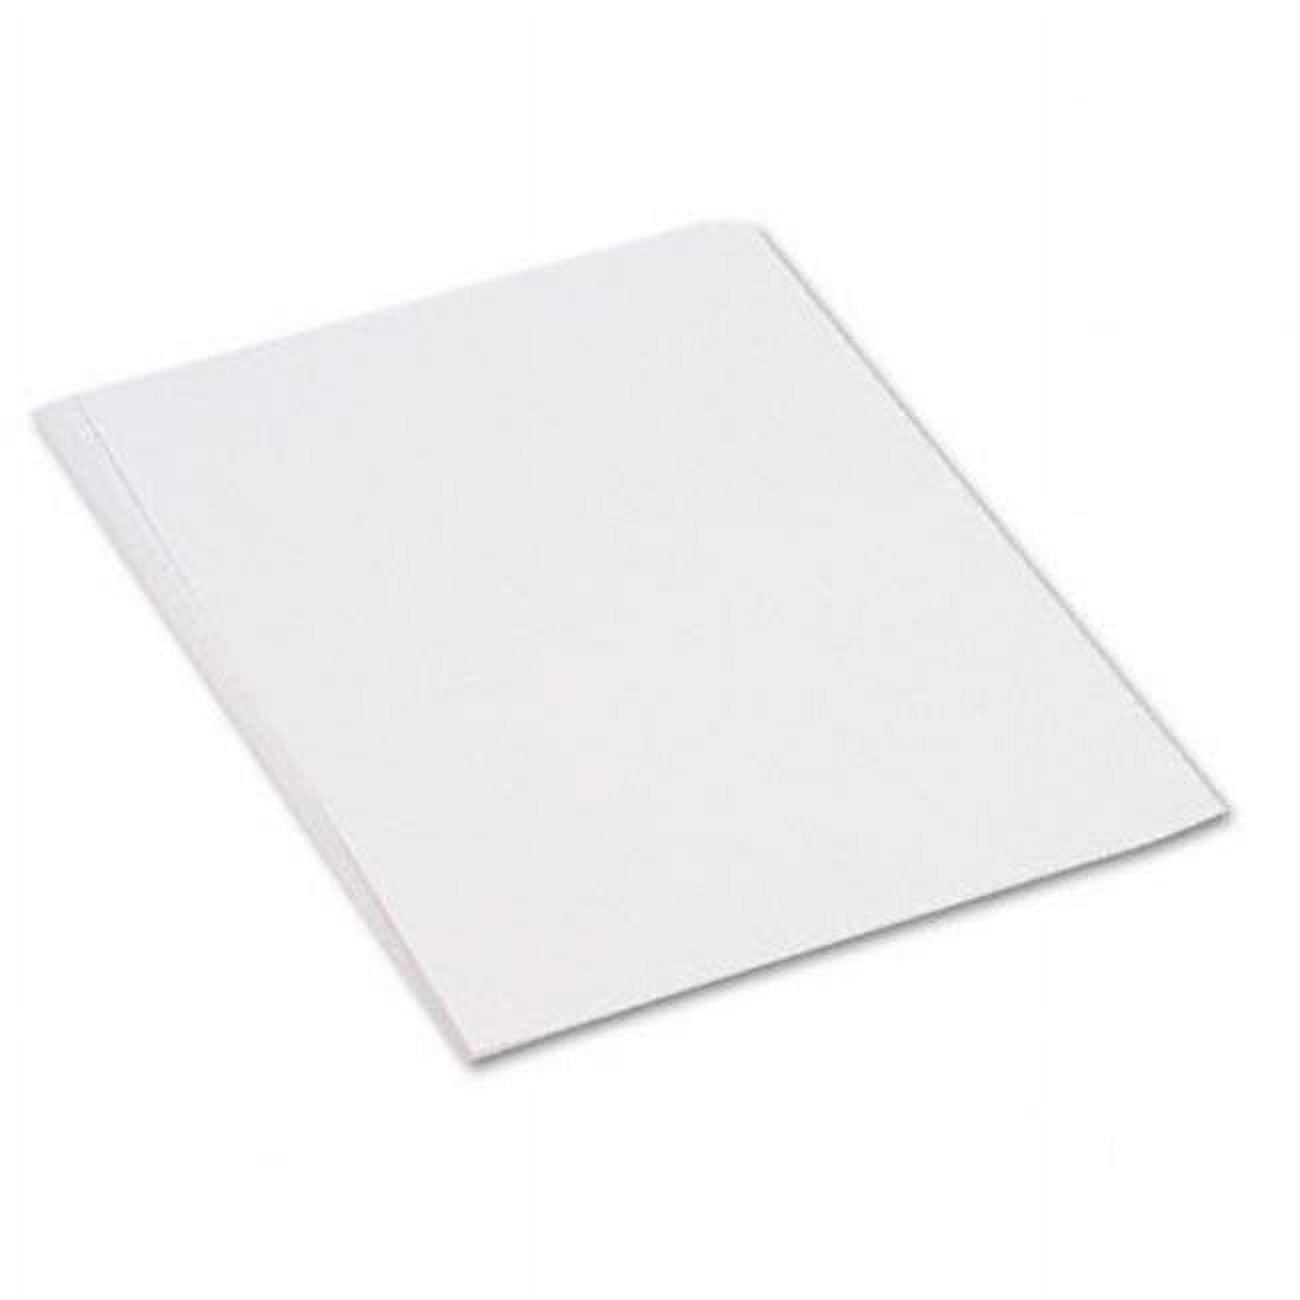 Prang (Formerly SunWorks) Construction Paper, White, 12 x 18, 50 Sheets